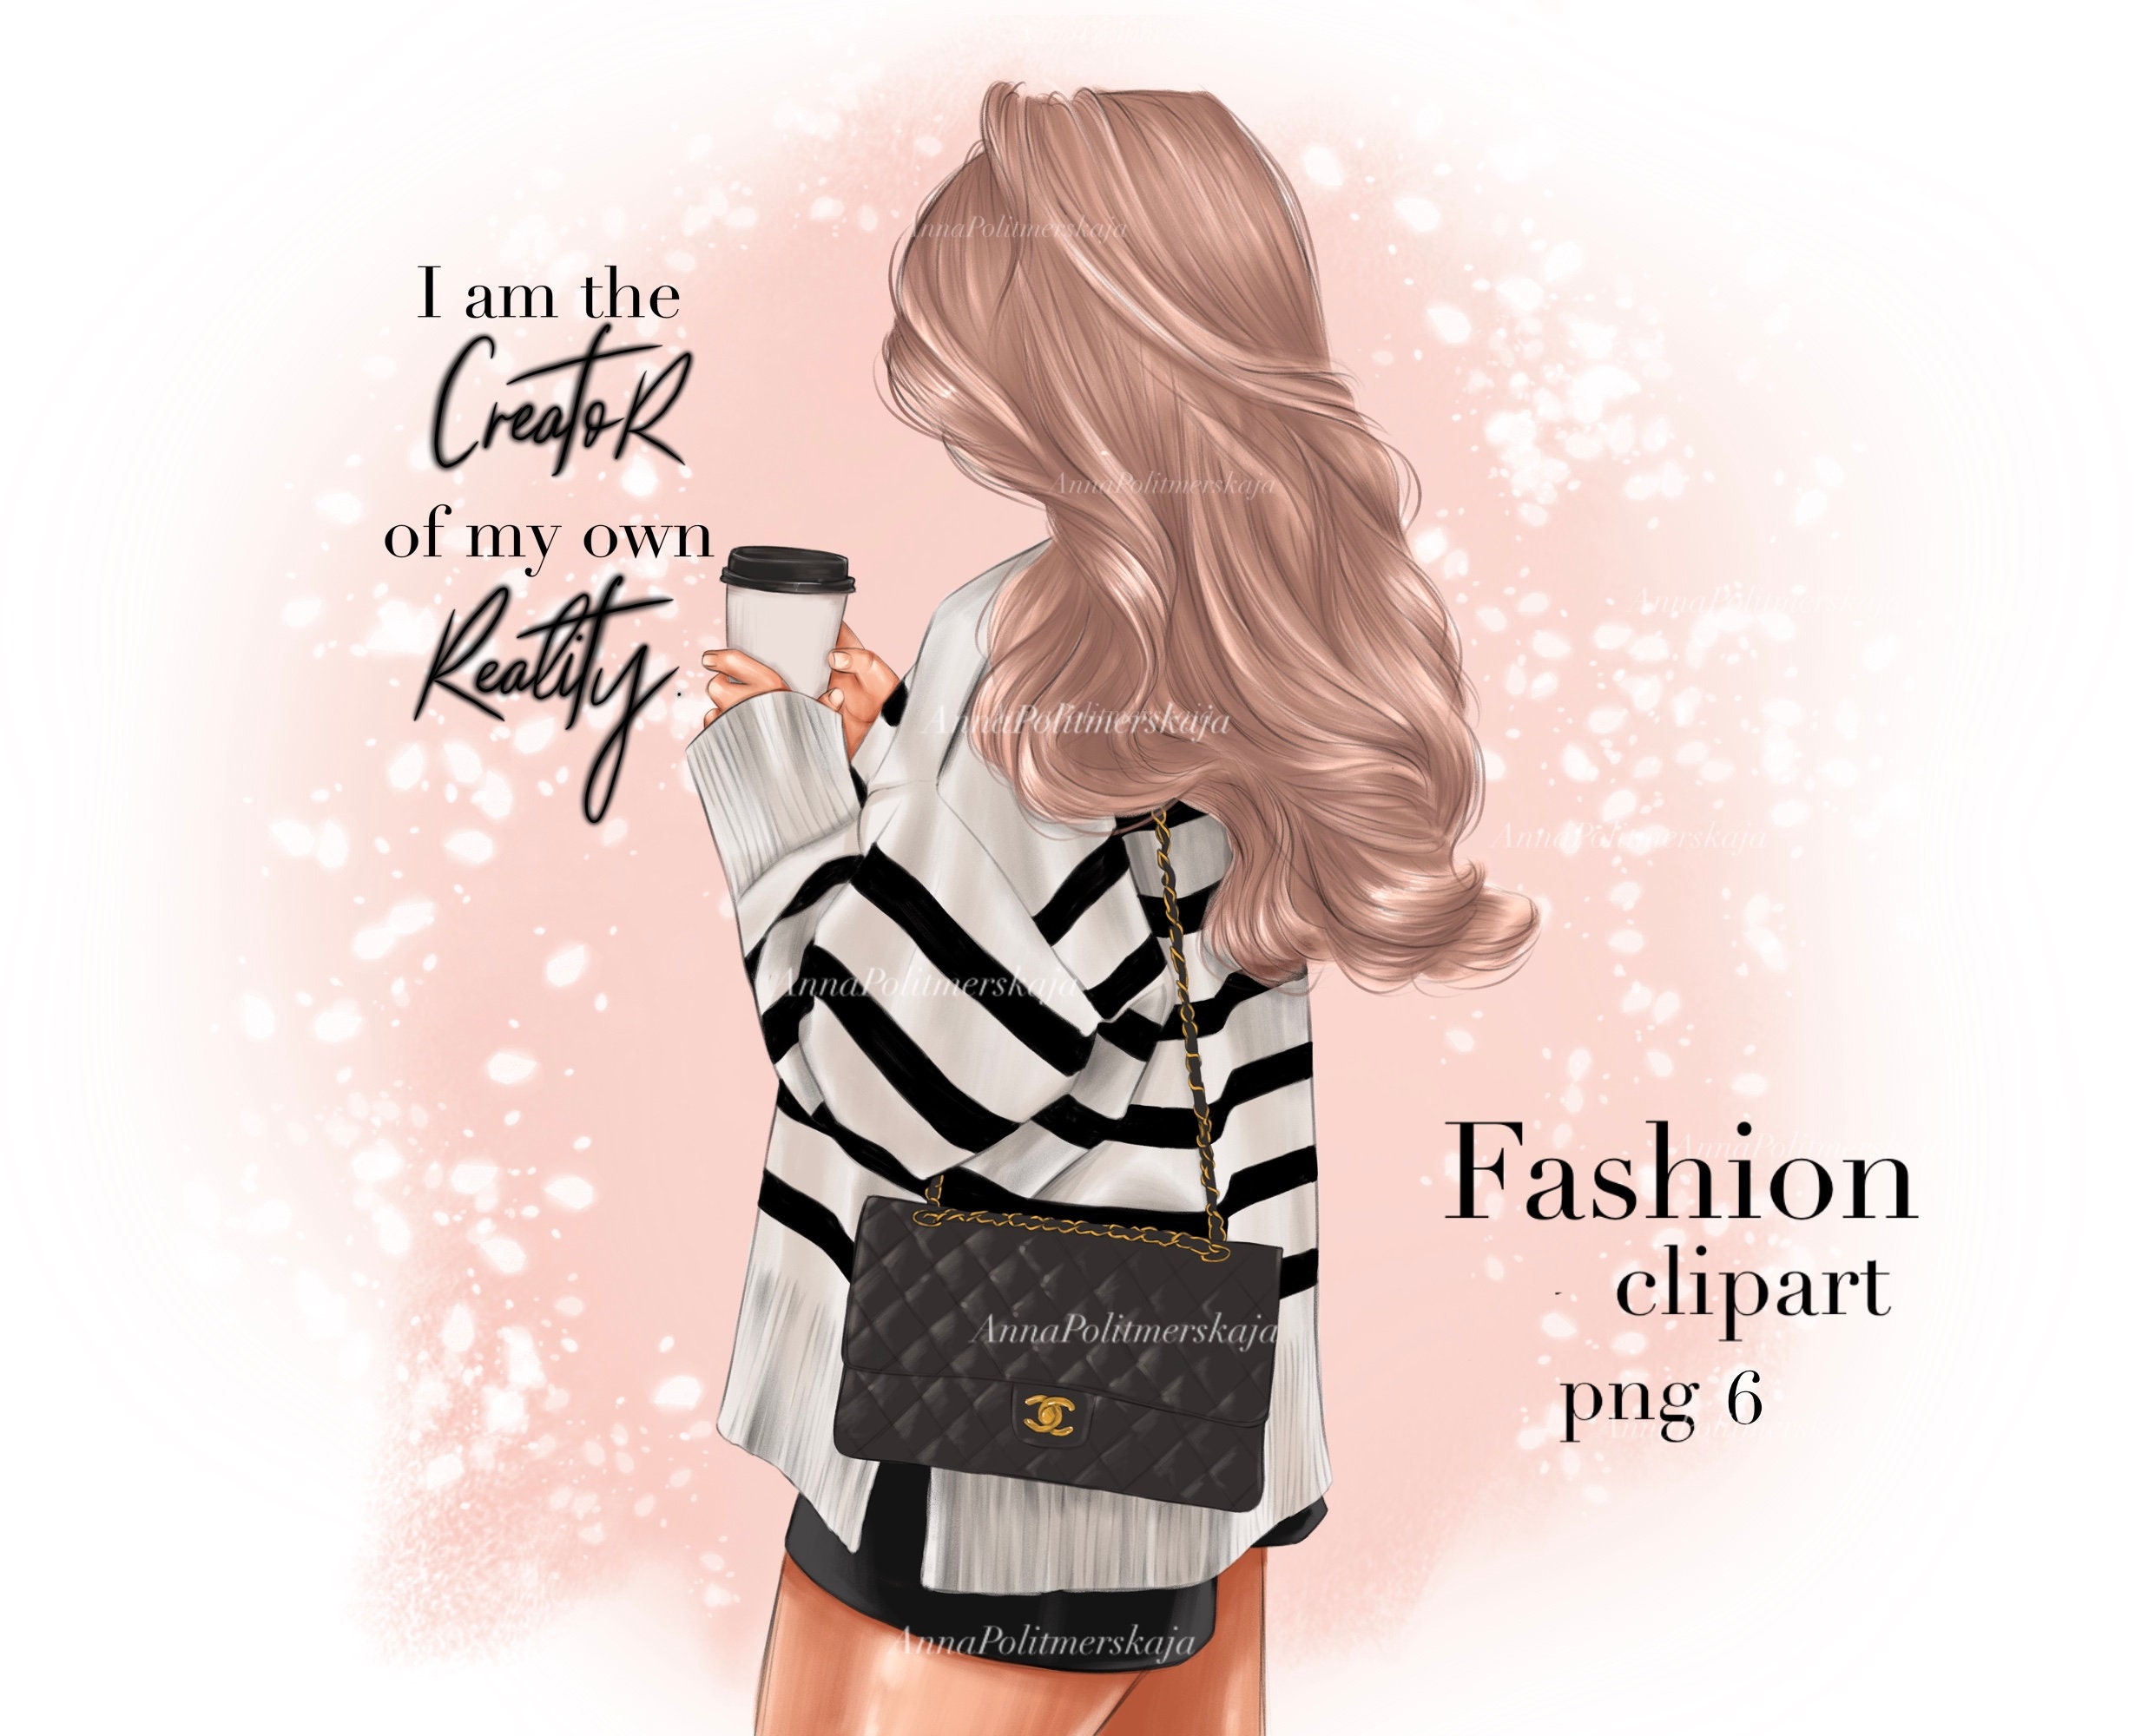 Download Fashion Chain Strap Bag Design Handbag Chanel HQ PNG Image